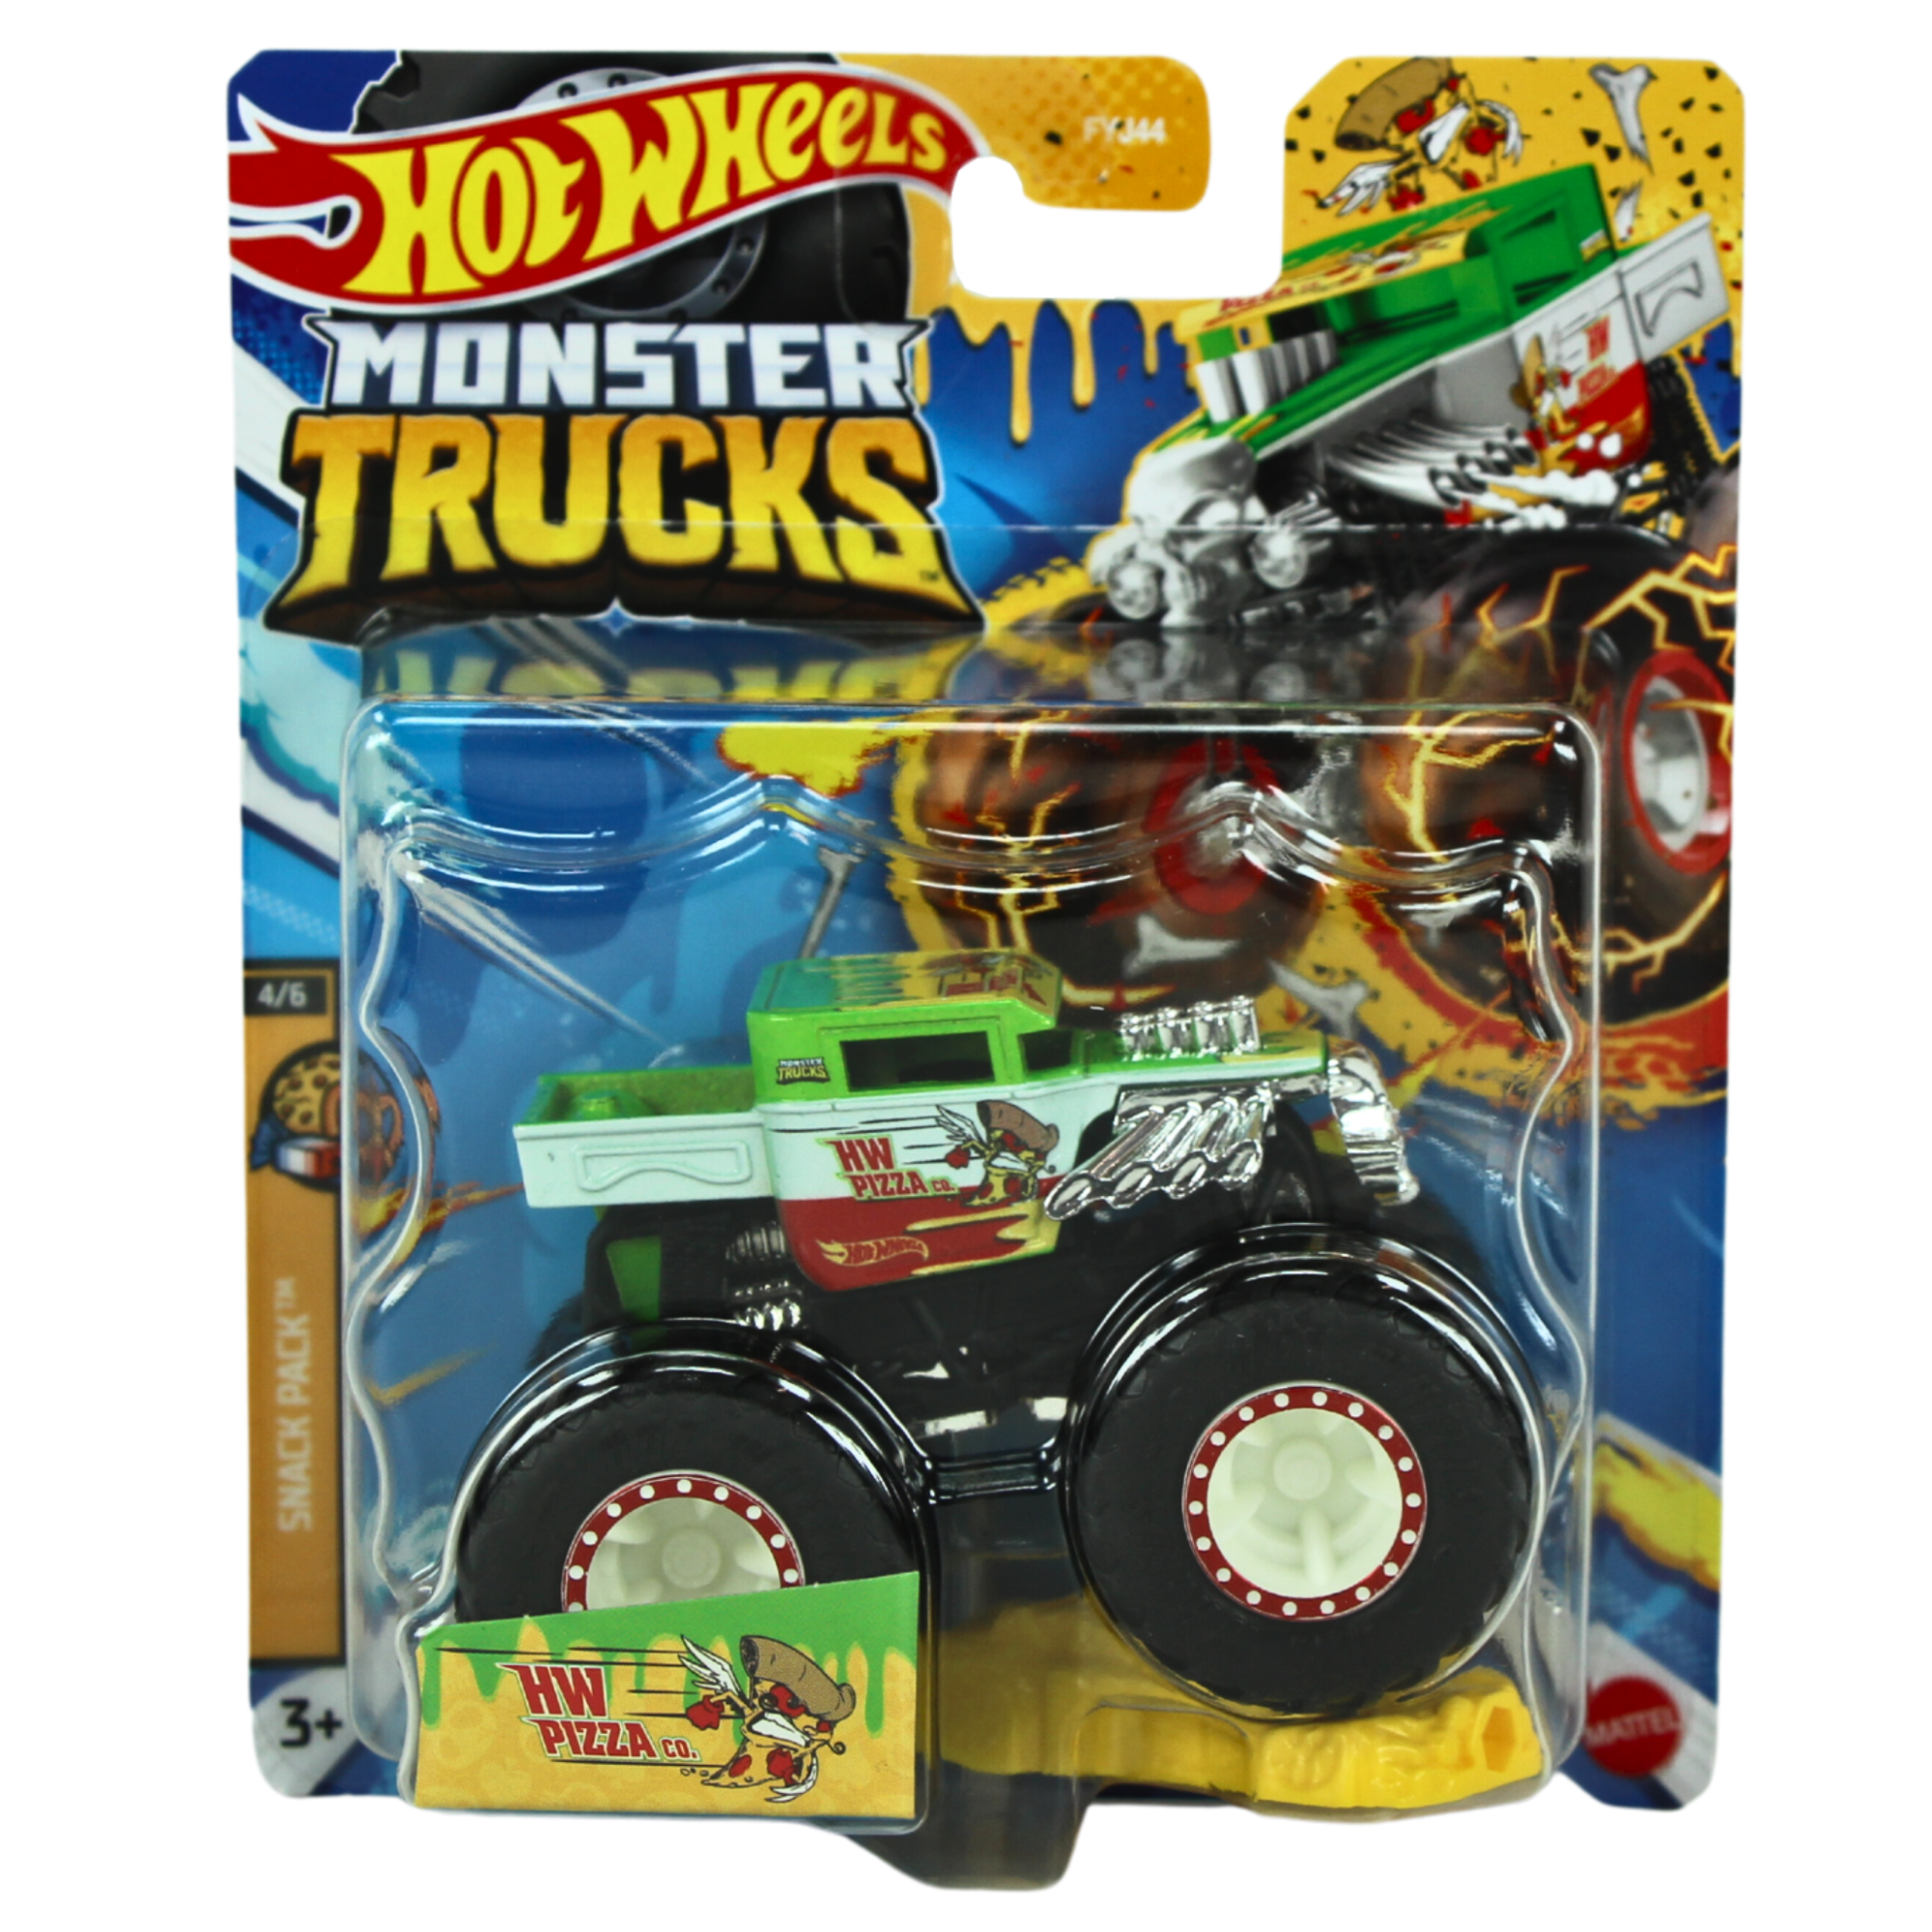 Hot wheels Monster Trucks Snack Pack - HW Pizza Co. 1:64 Diecast 4/6 - Toptoys2u